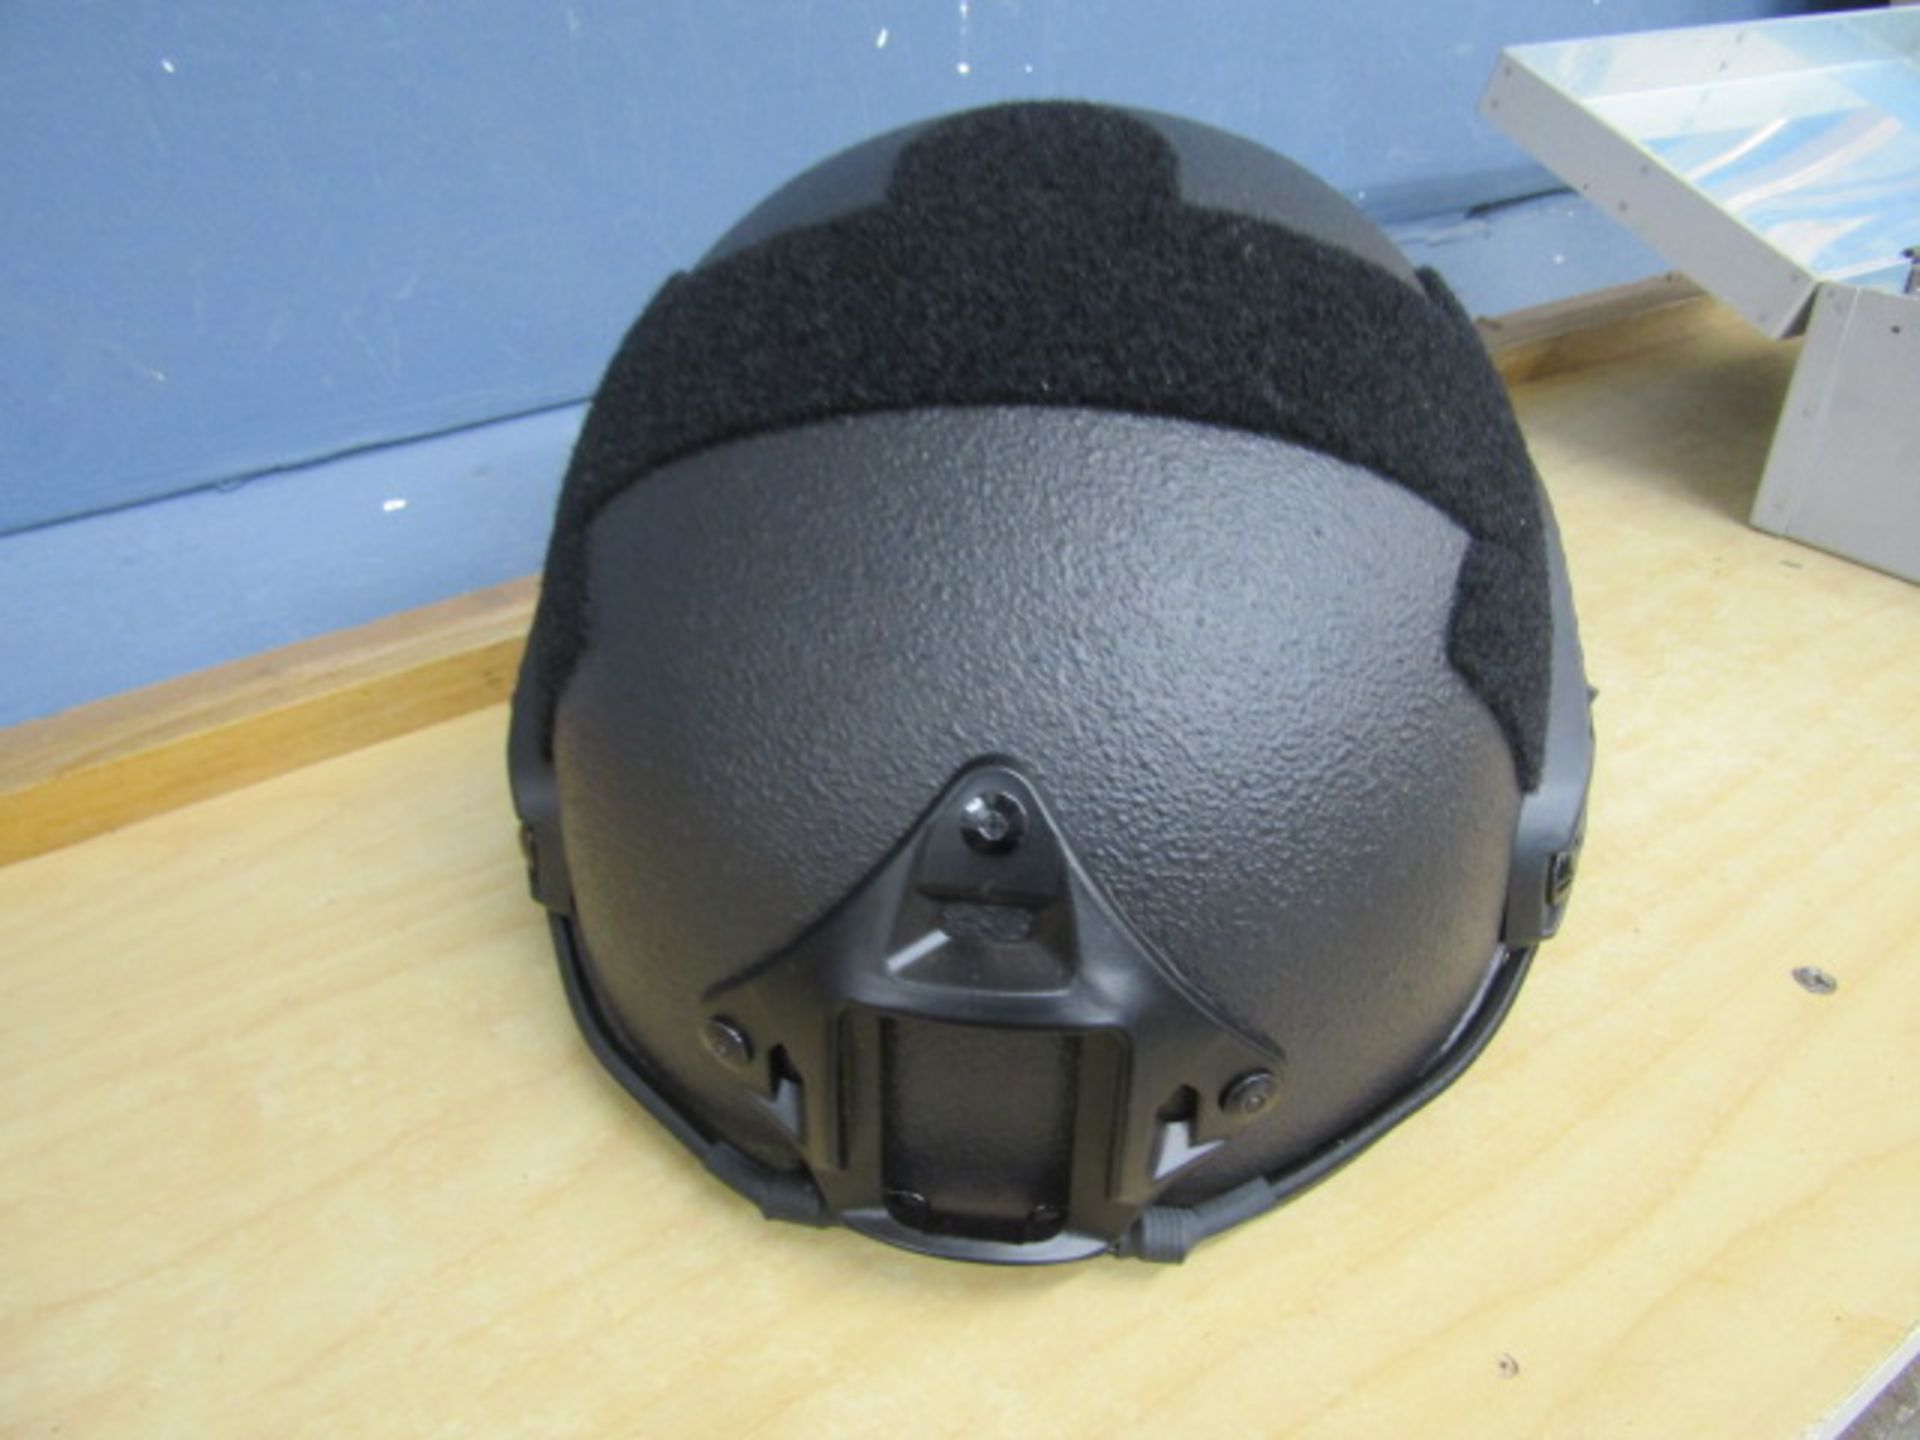 Kevlar (Aramid) ballistic FAST helmet with copy of test report- large size, unused - Image 3 of 5